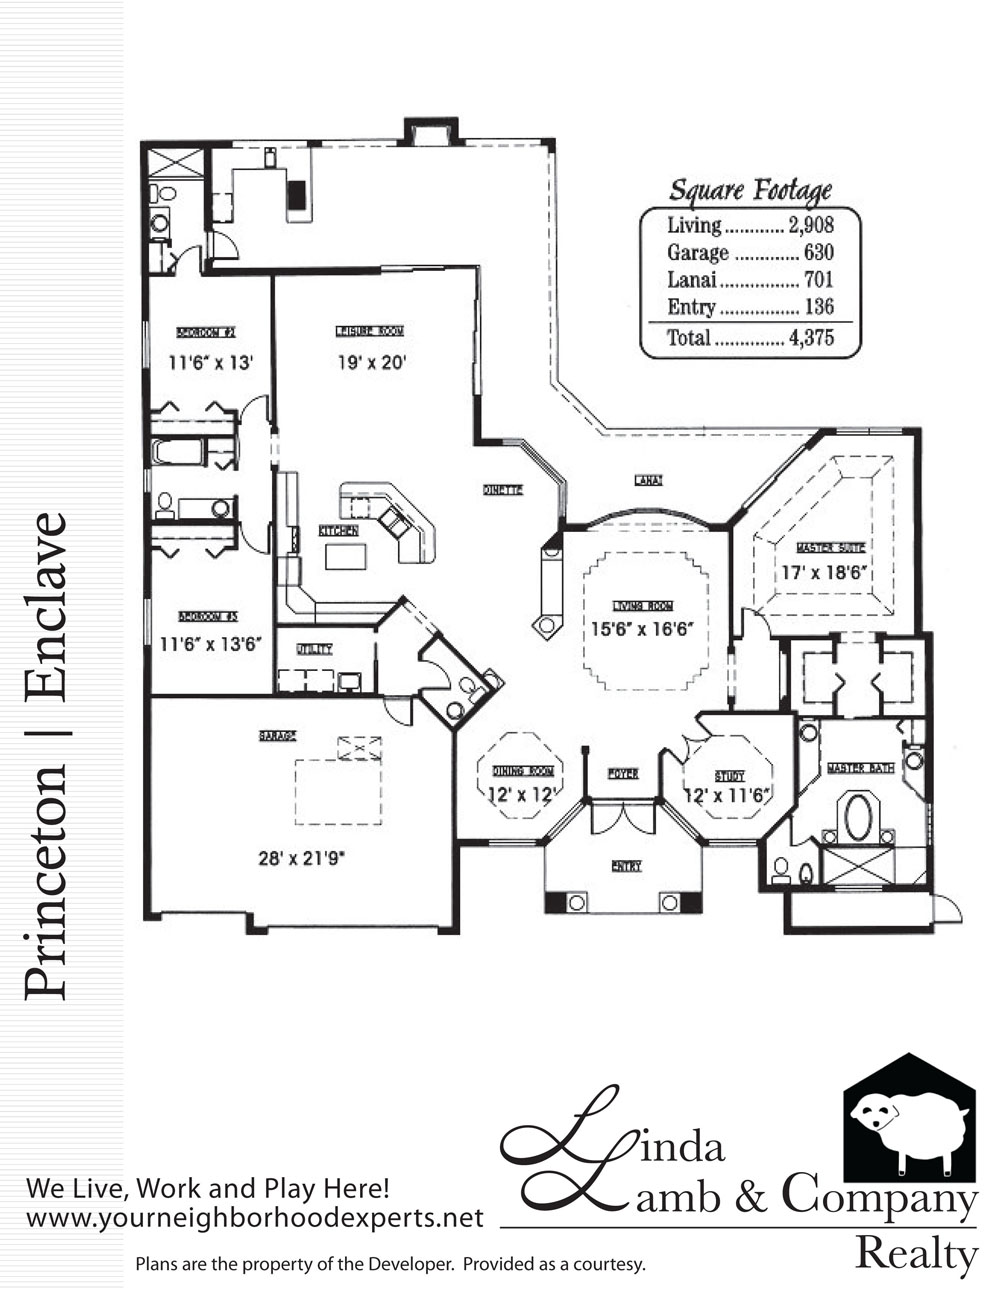 Princeton floor plan single family luxury home, heritage palms golf & country club, linda lamb & company realty